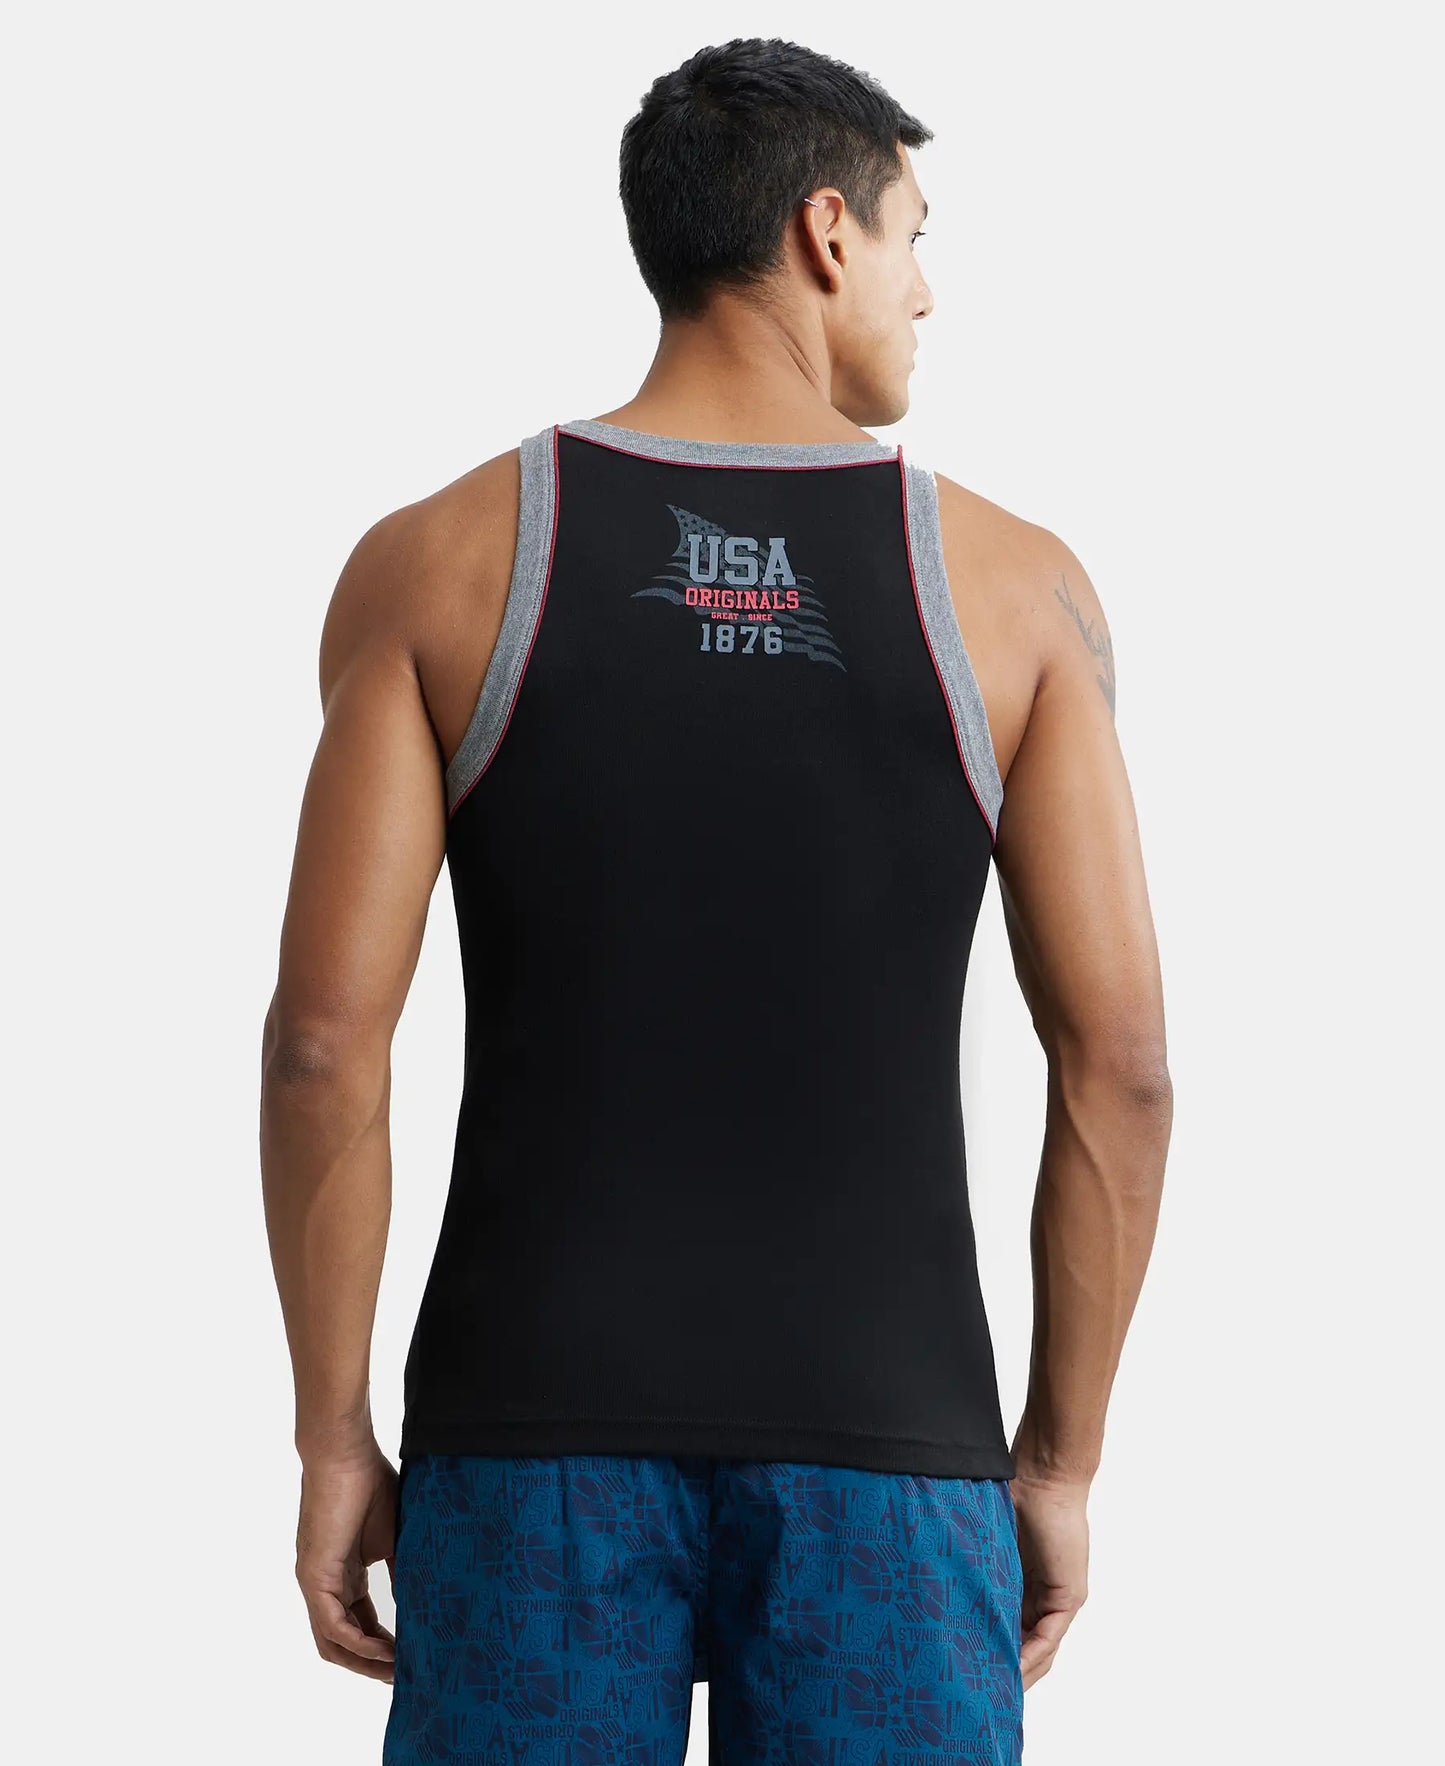 Super Combed Cotton Rib Square Neck Gym Vest with Graphic Print - Black & Grey Melange-3